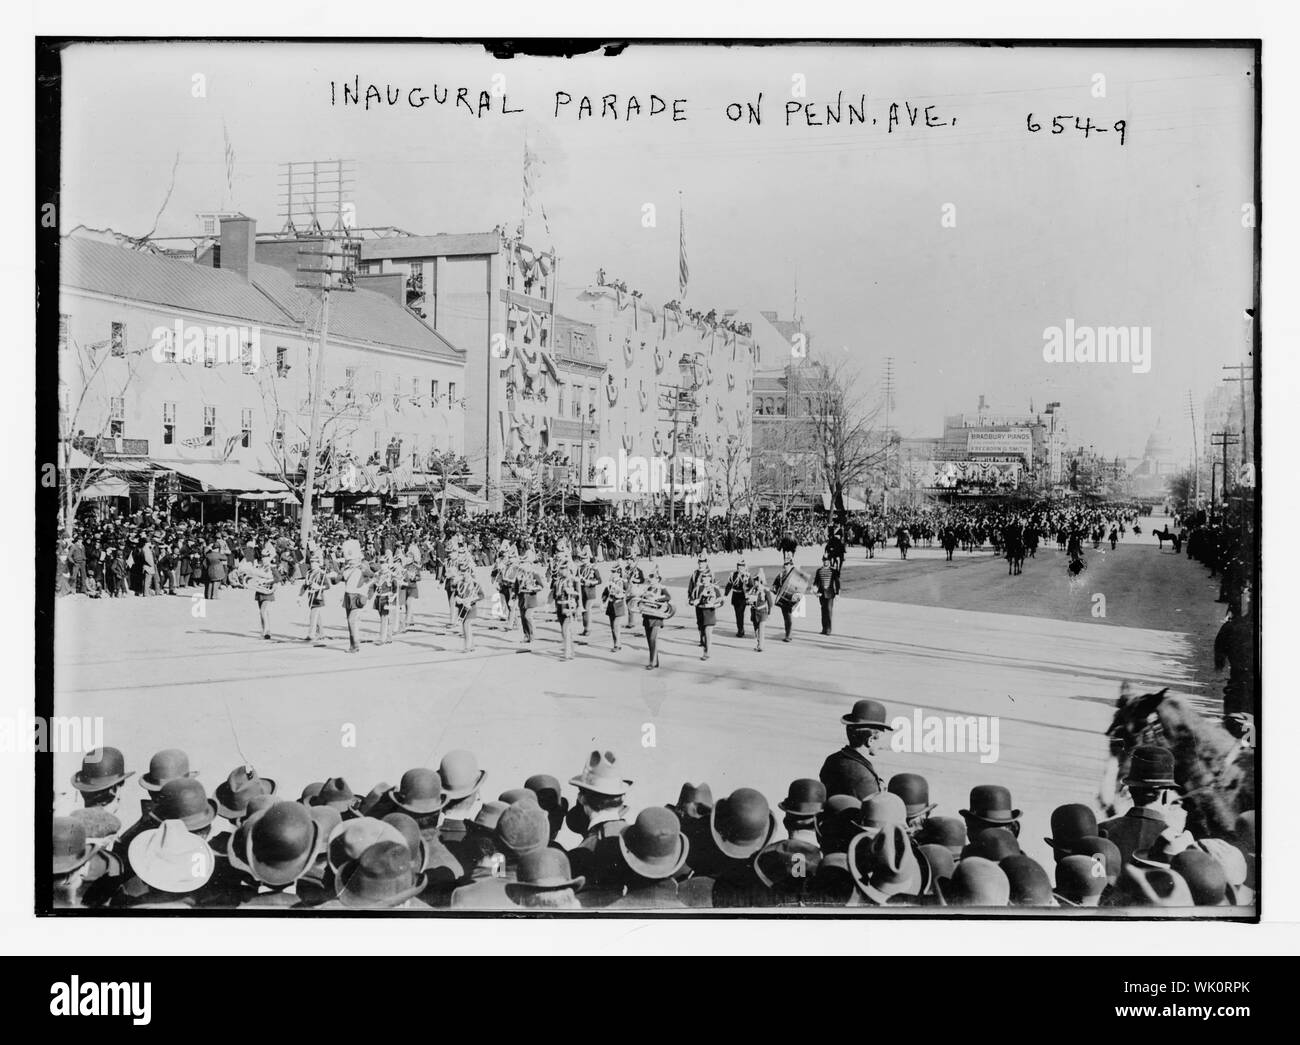 Inaugural parade on Pennsylvania Ave., Washington, D.C. Stock Photo